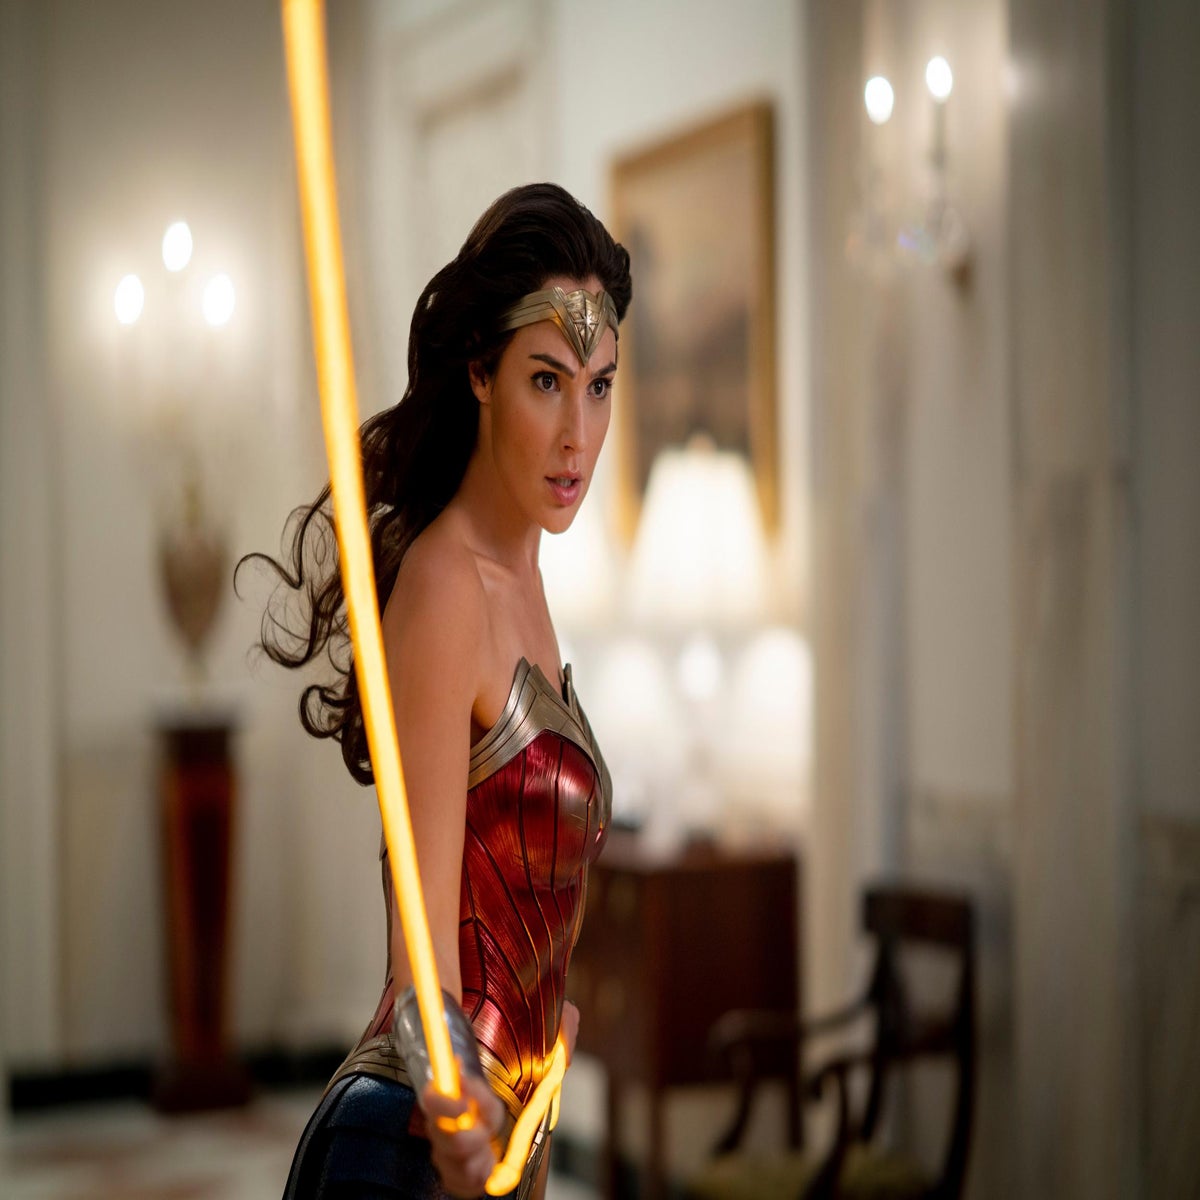 Wonder Woman 3, Cancelled Movies. Wiki